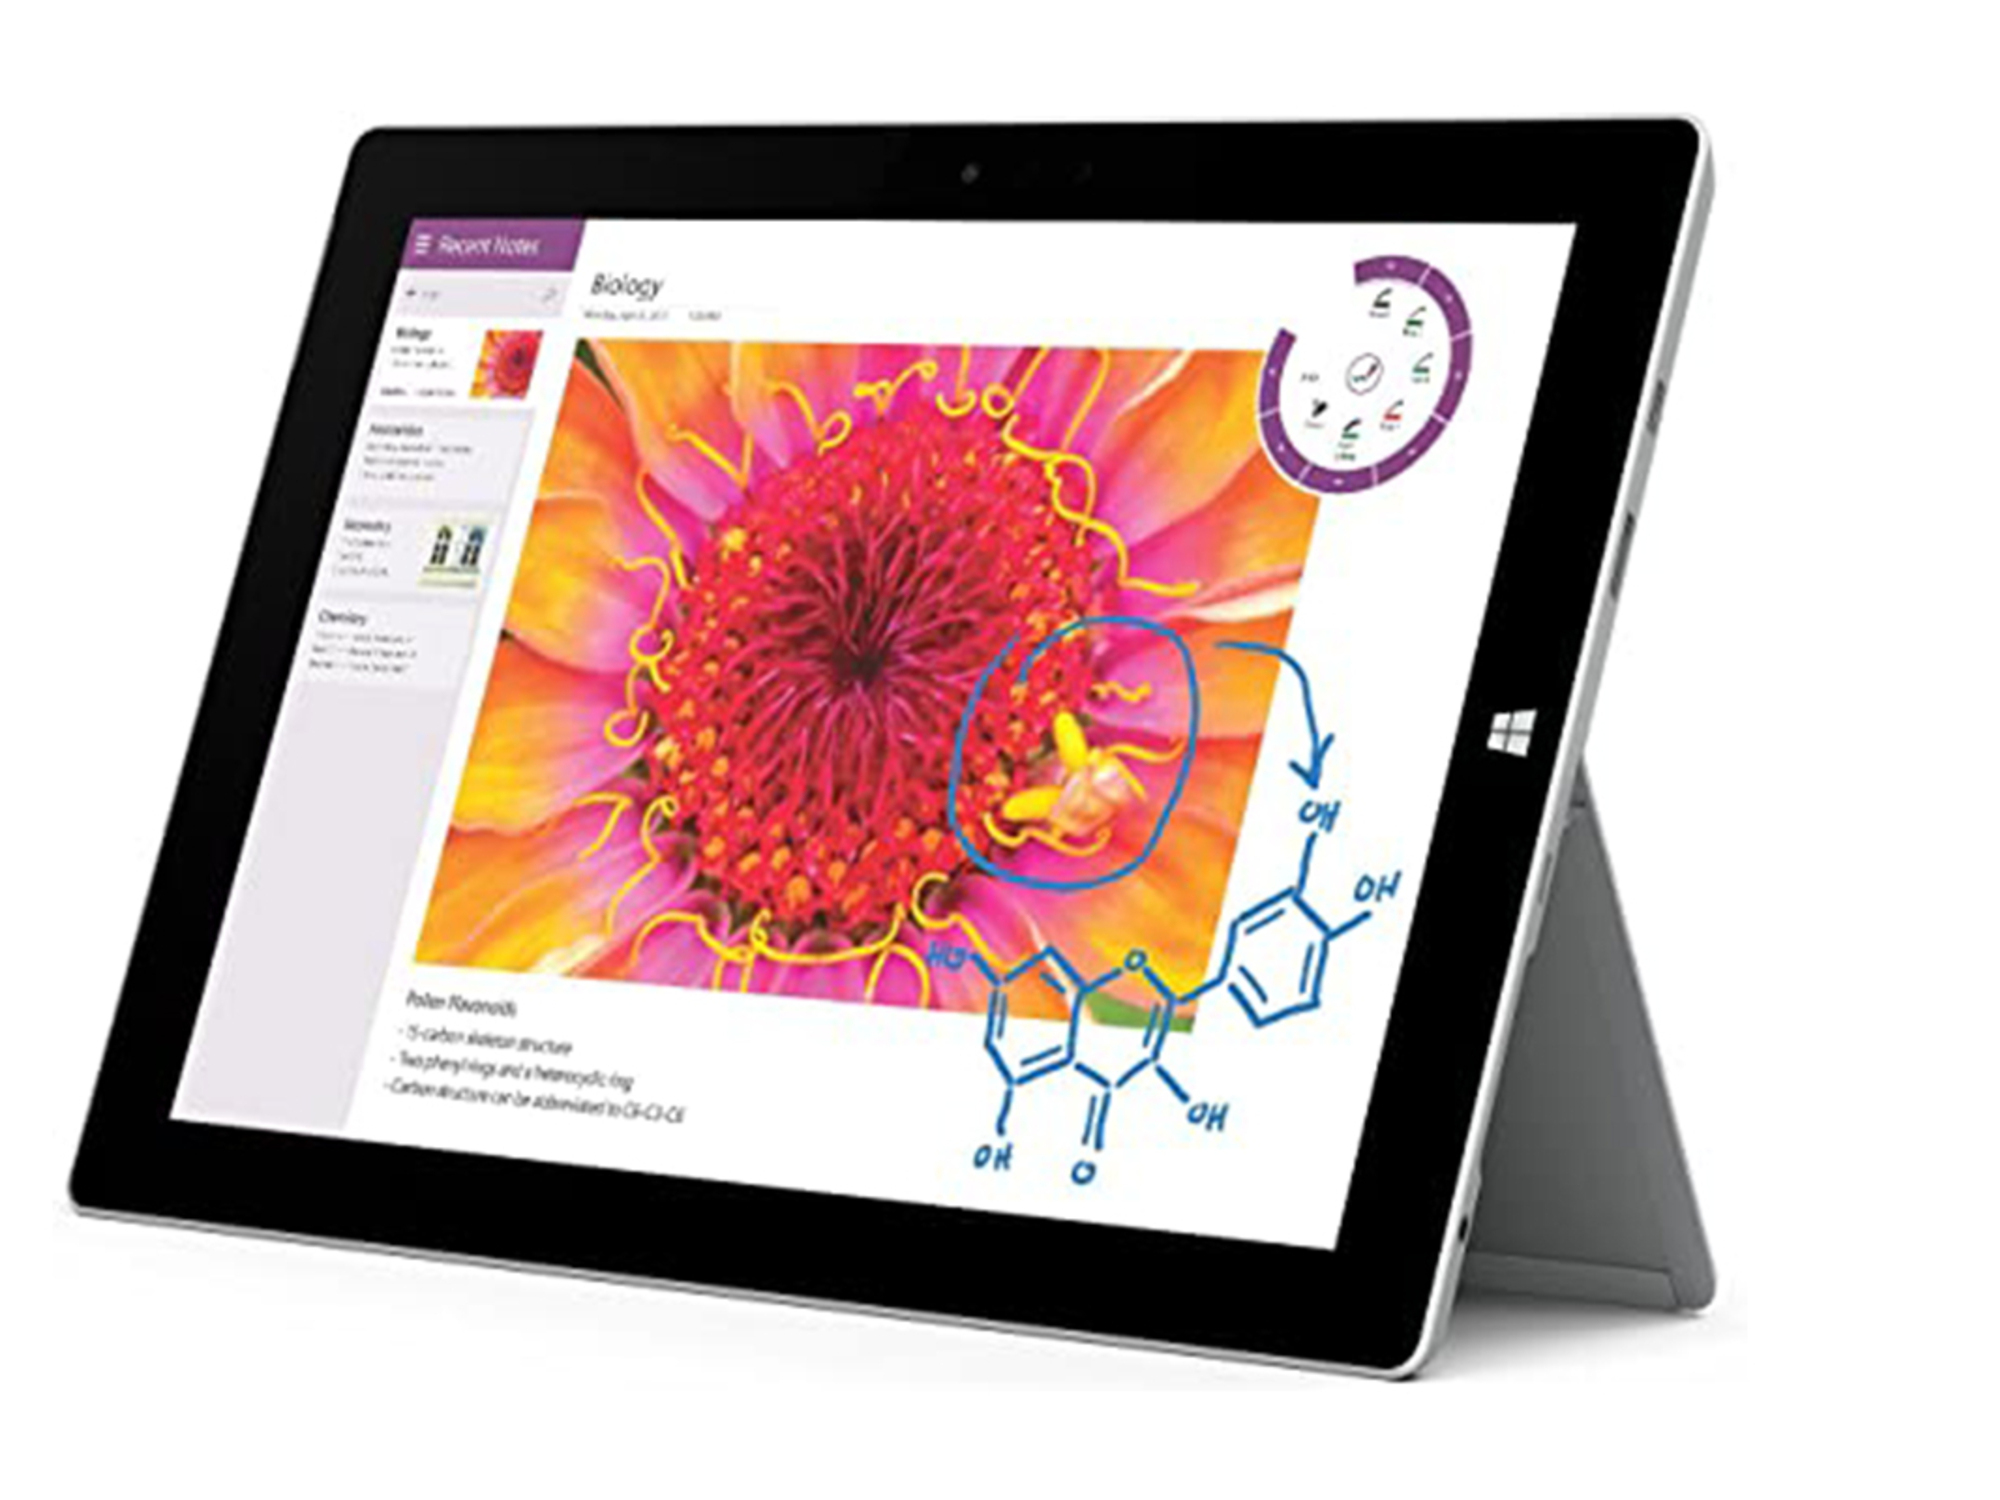 Compra este Microsoft Surface 3 reacondicionado por $200